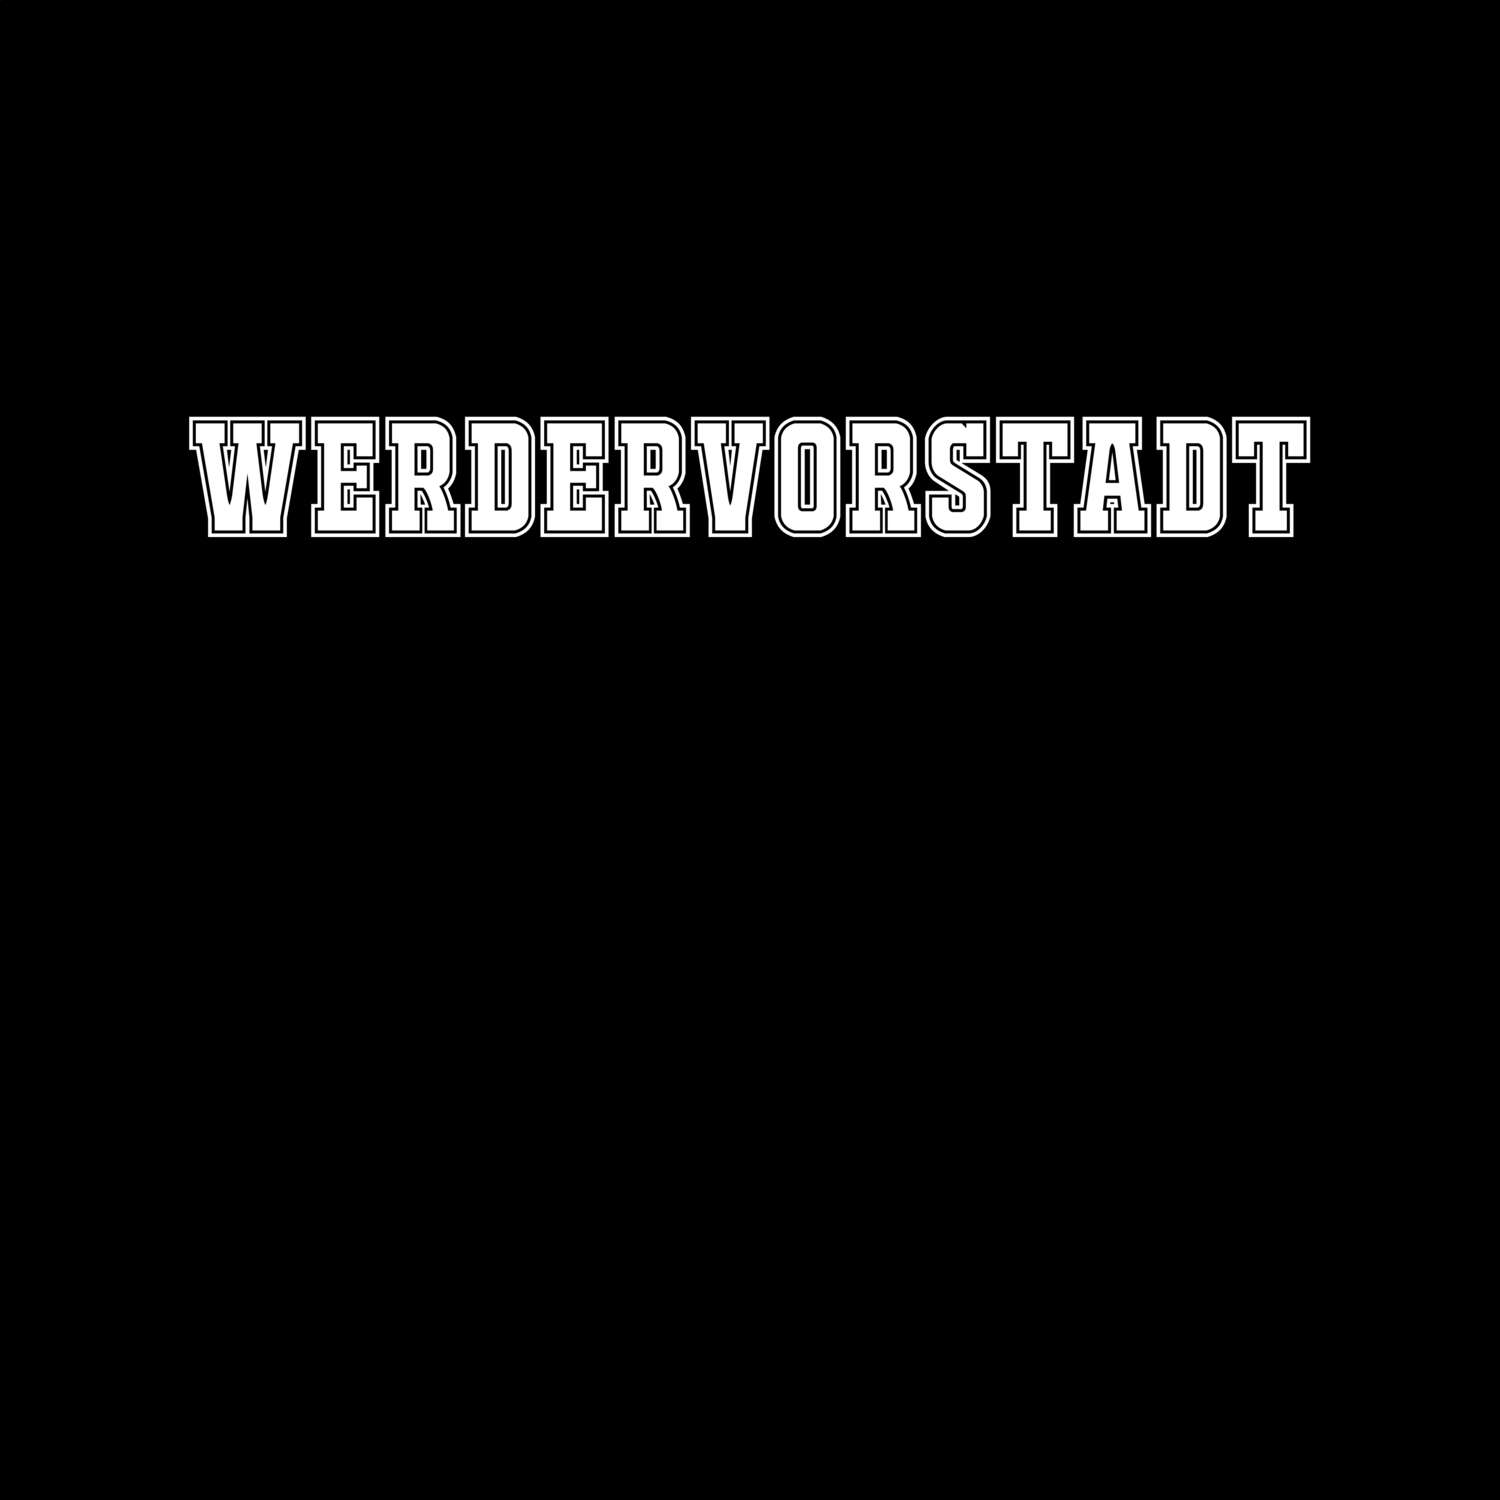 Werdervorstadt T-Shirt »Classic«